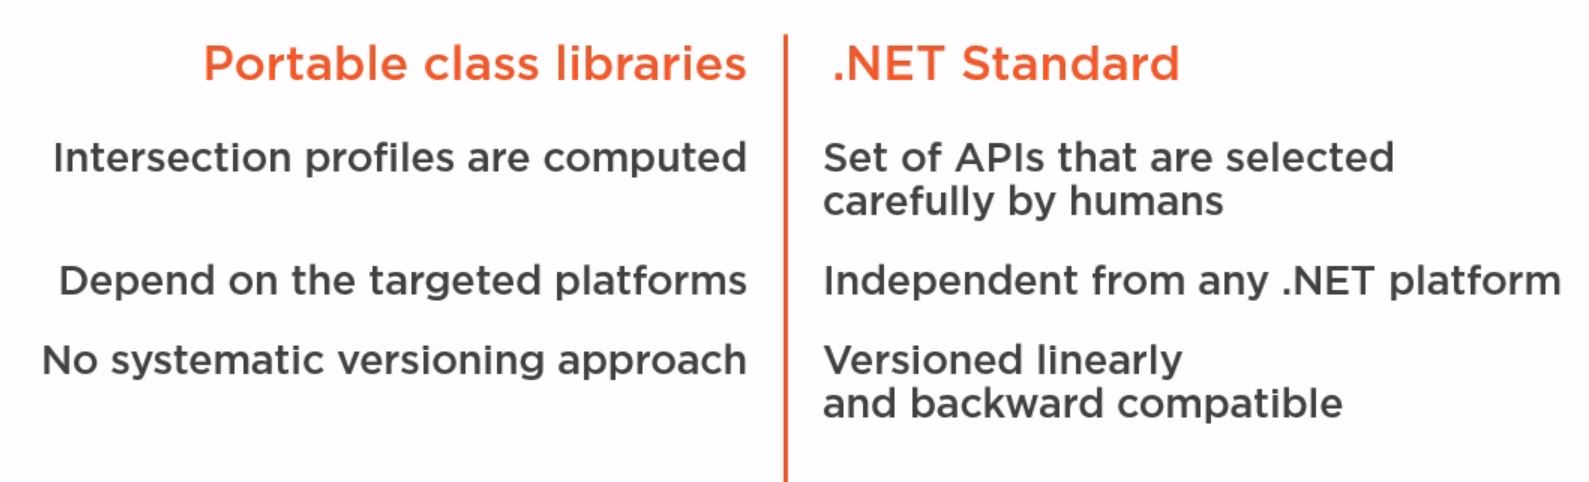 Portable Class Library vs .NET Standard